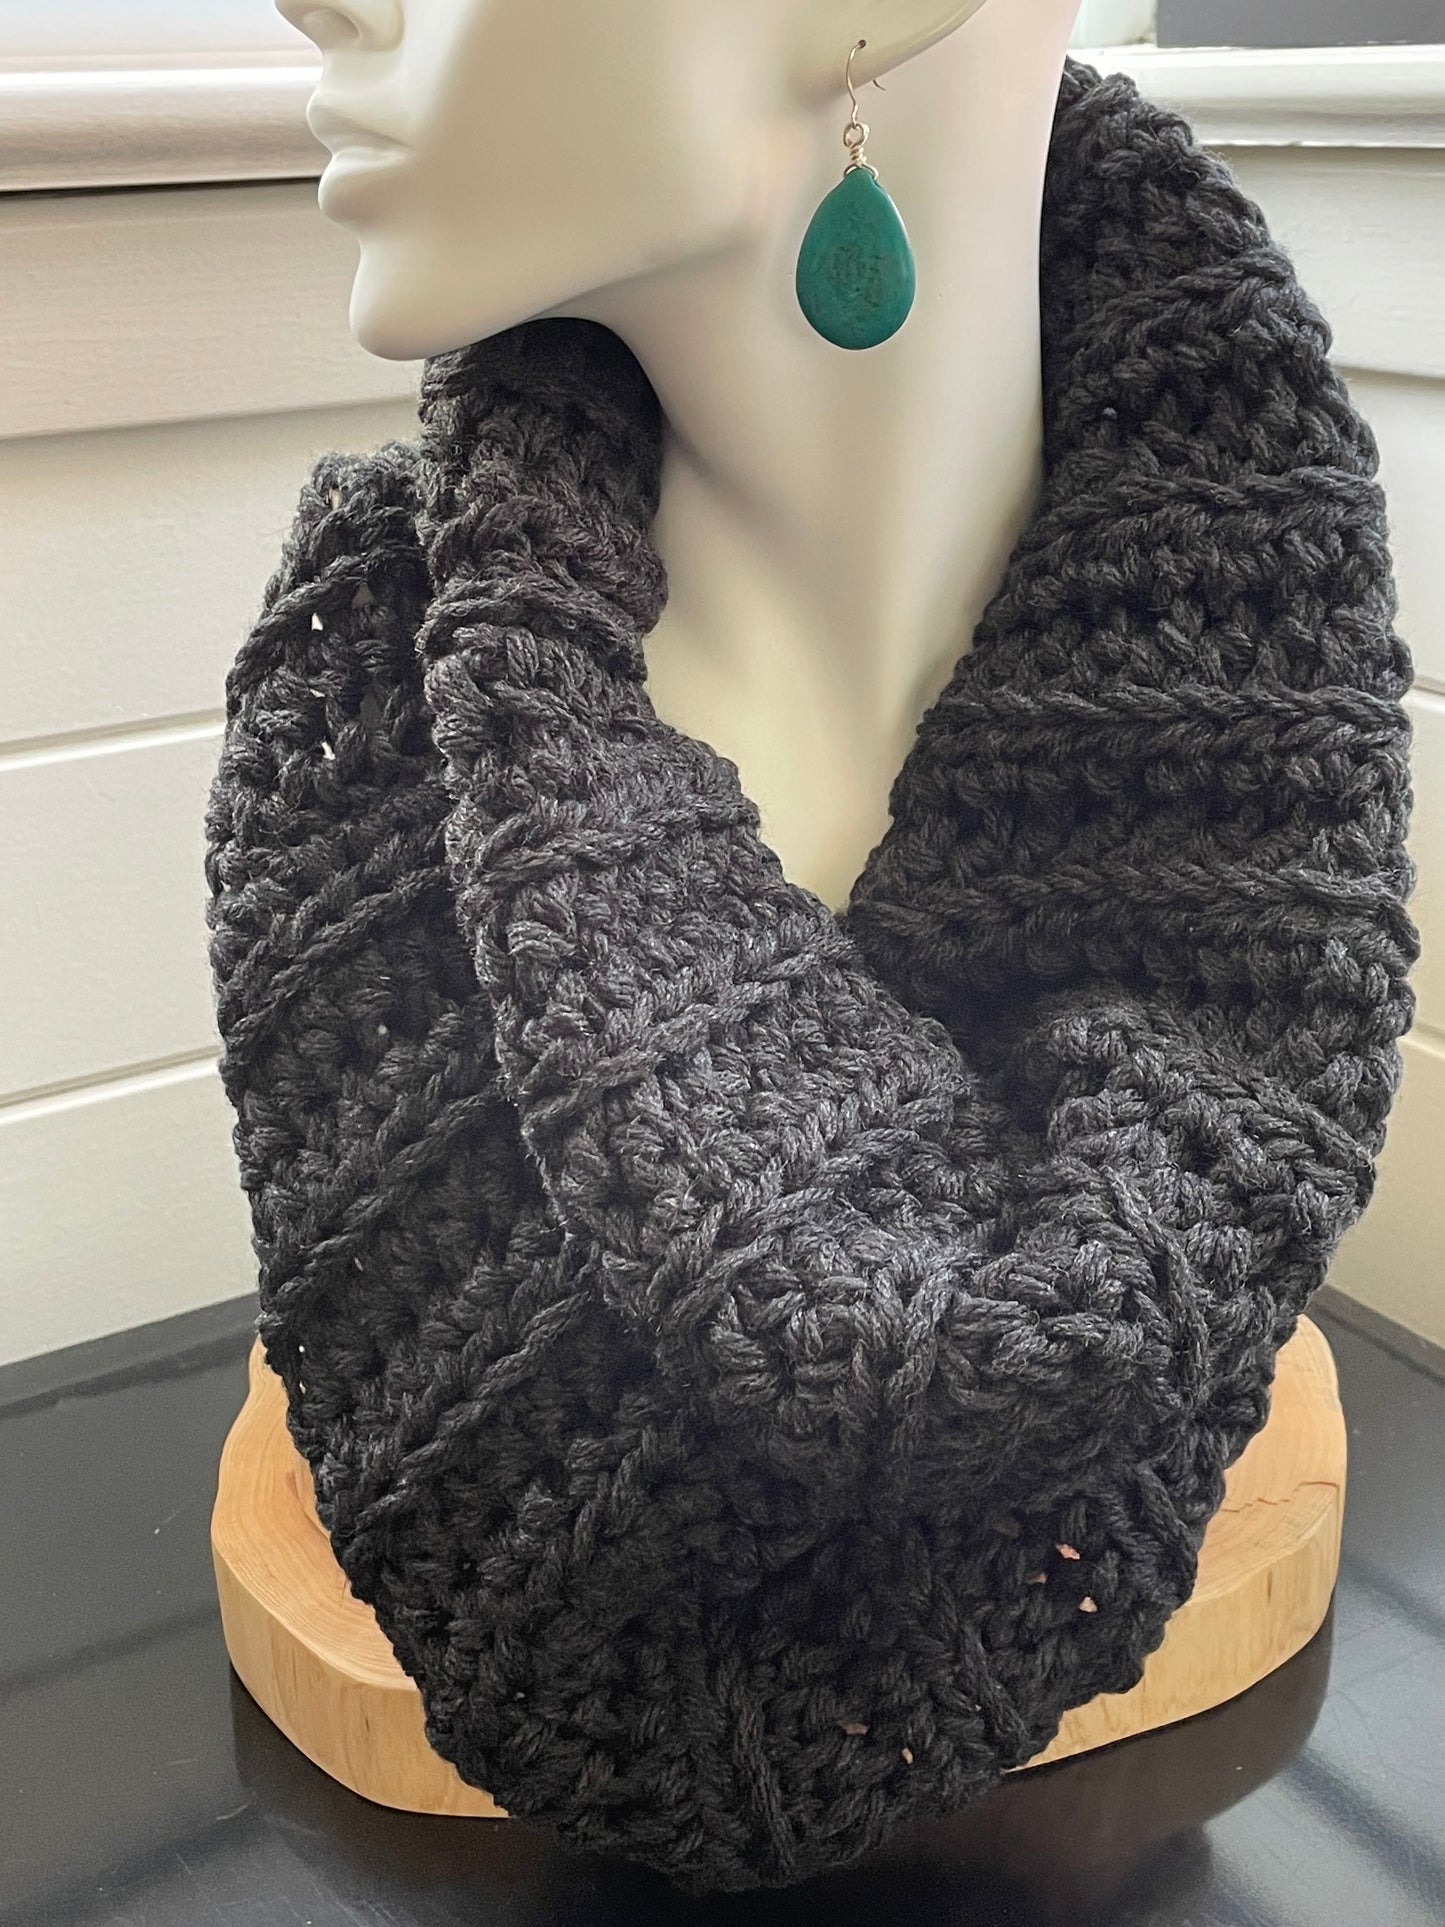 Charcoal Slate Grey Cowl Scarf Hand Crochet Knit Winter Fall Men Women Unisex Retro Vintage Style